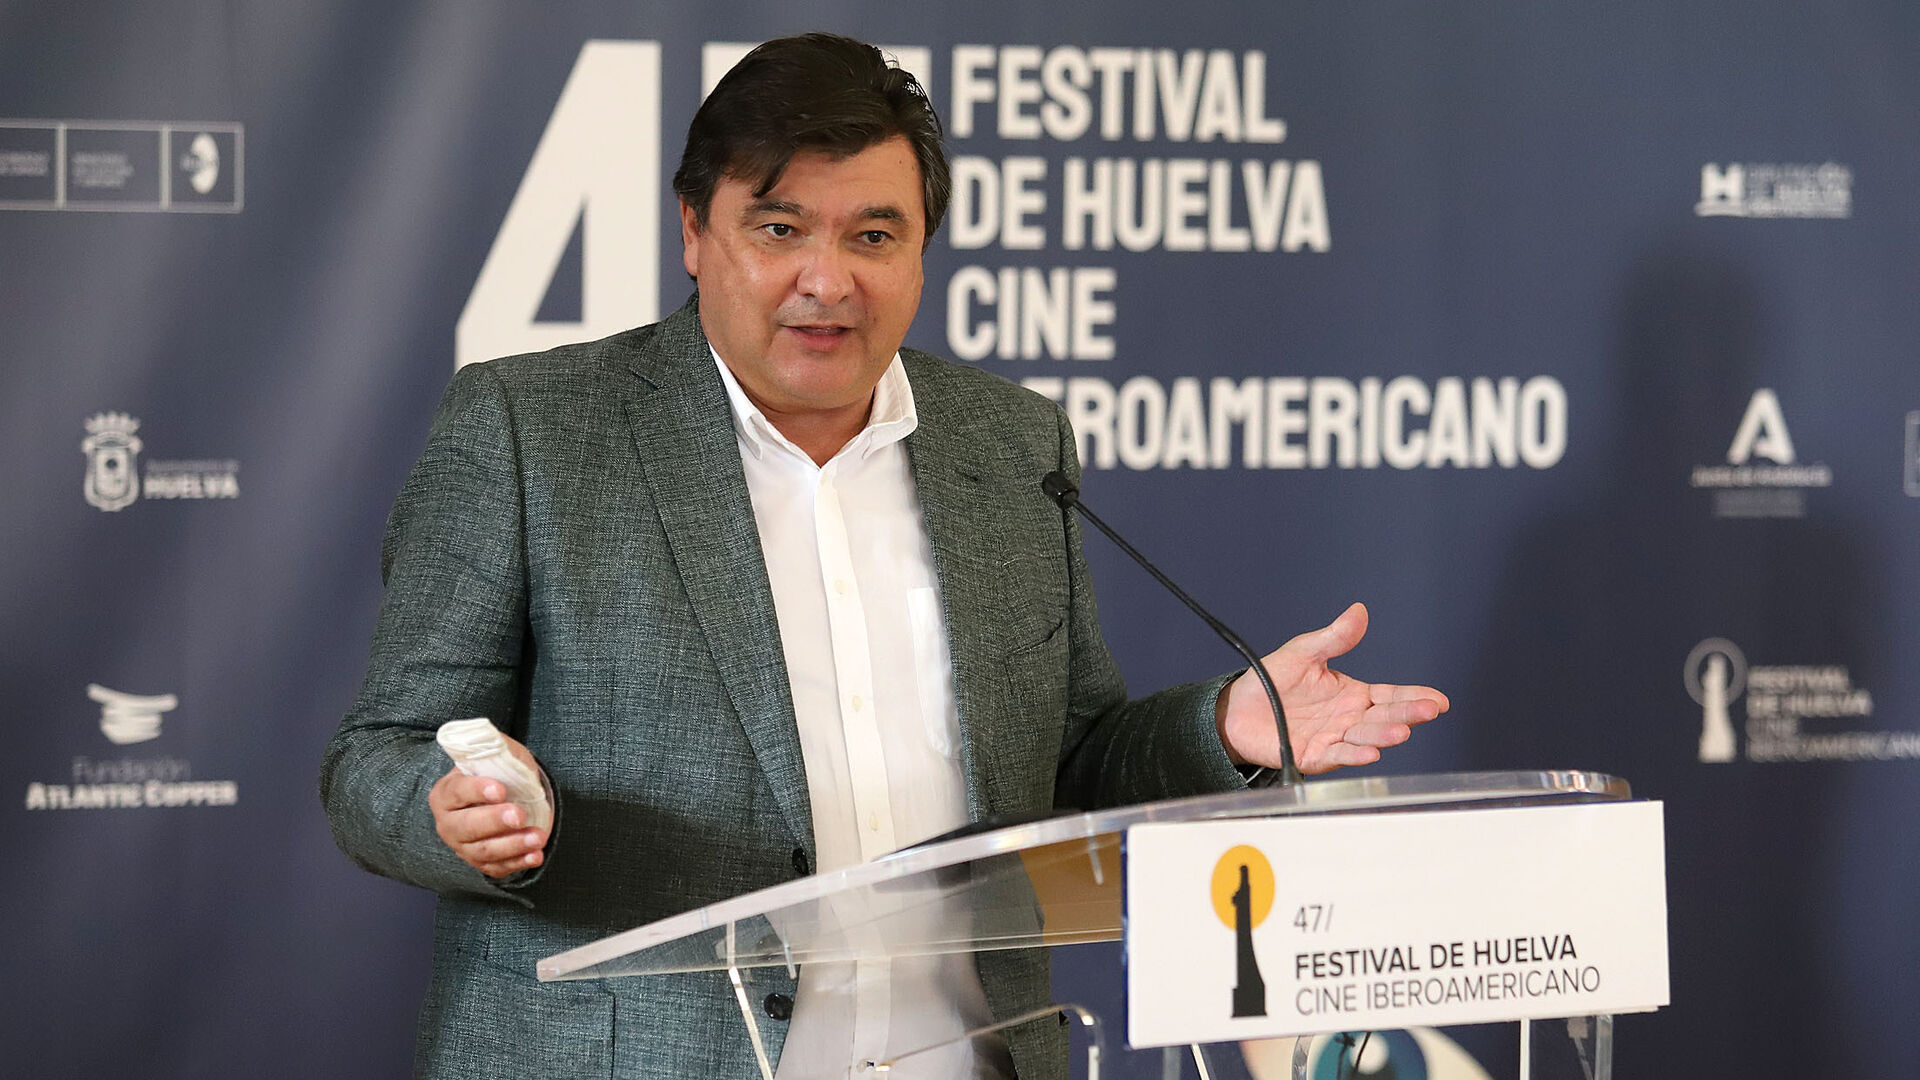 Im&aacute;genes de la presentaci&oacute;n de la 47 edici&oacute;n del Festival de Huelva Cine Iberoamericano